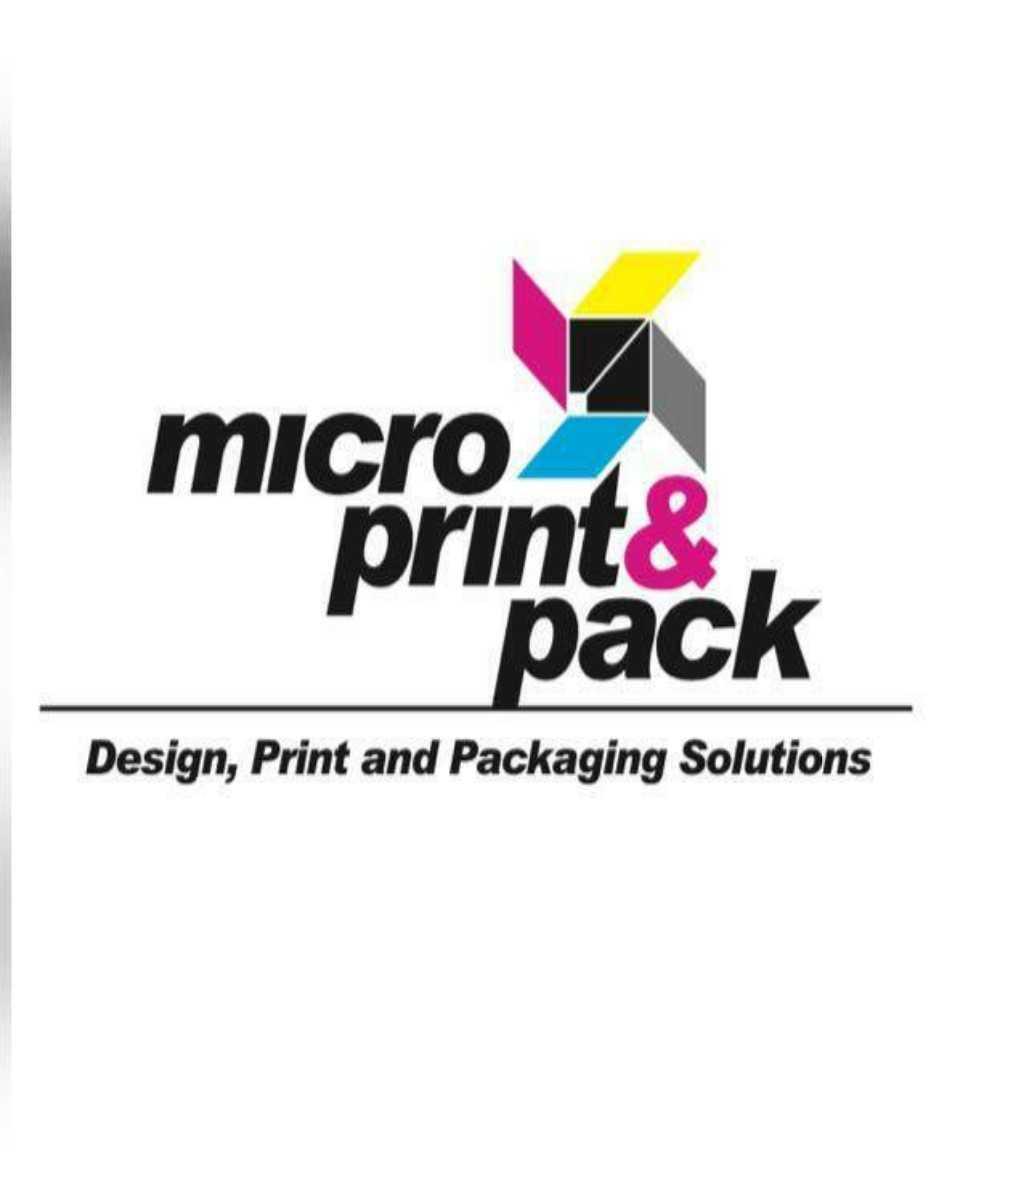 MICRO PRINT & PACK